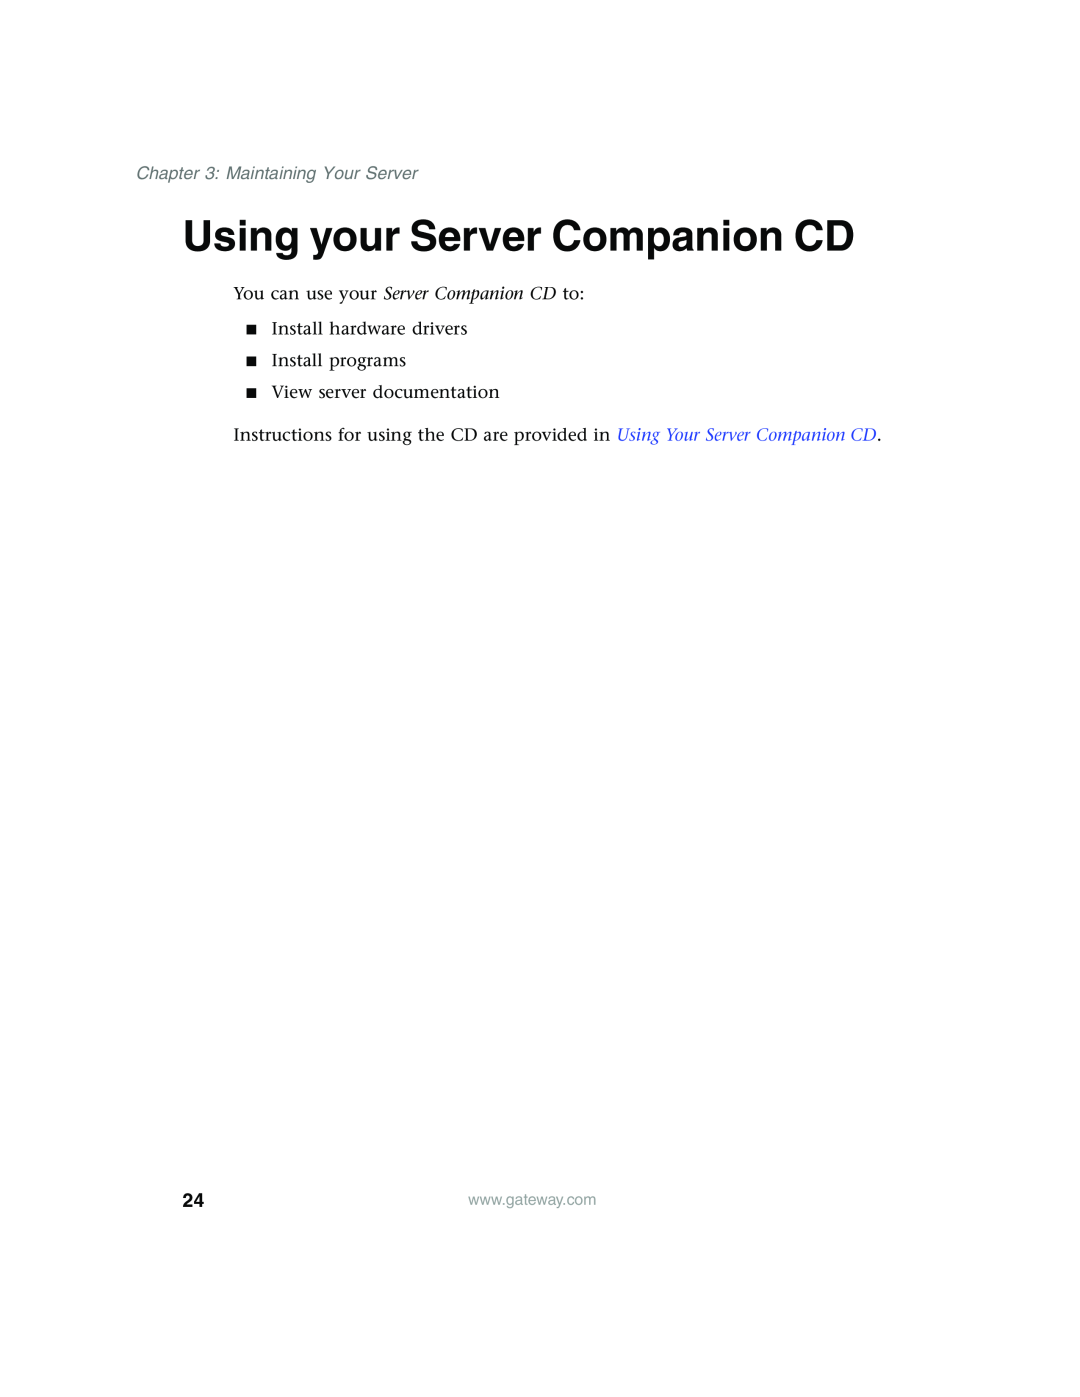 Gateway 980 manual Using your Server Companion CD, Maintaining Your Server, Install programs View server documentation 